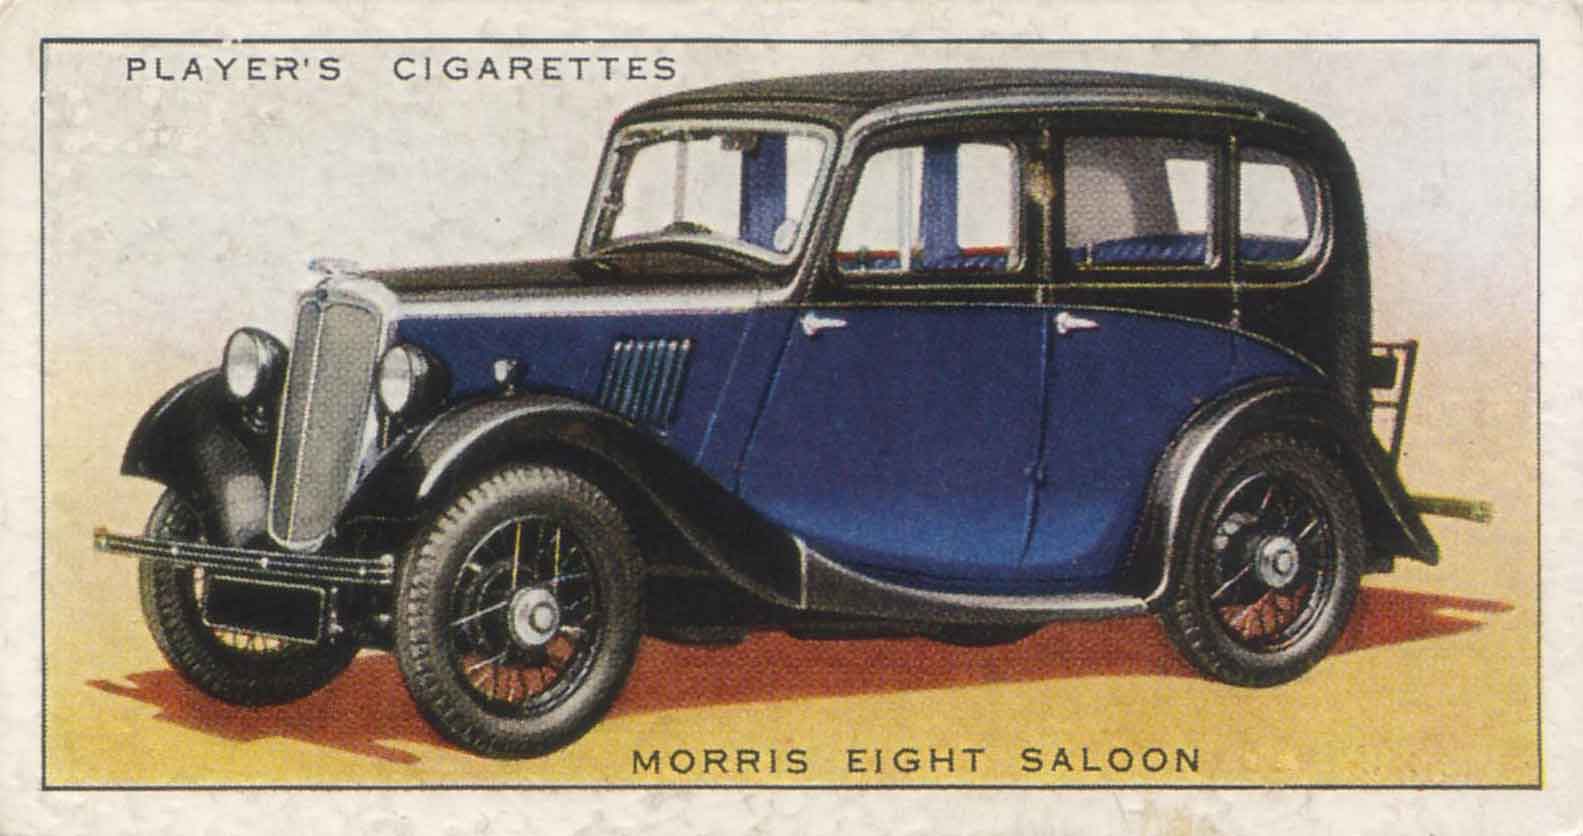 Morris Eight Saloon. 1937 cigarette card.